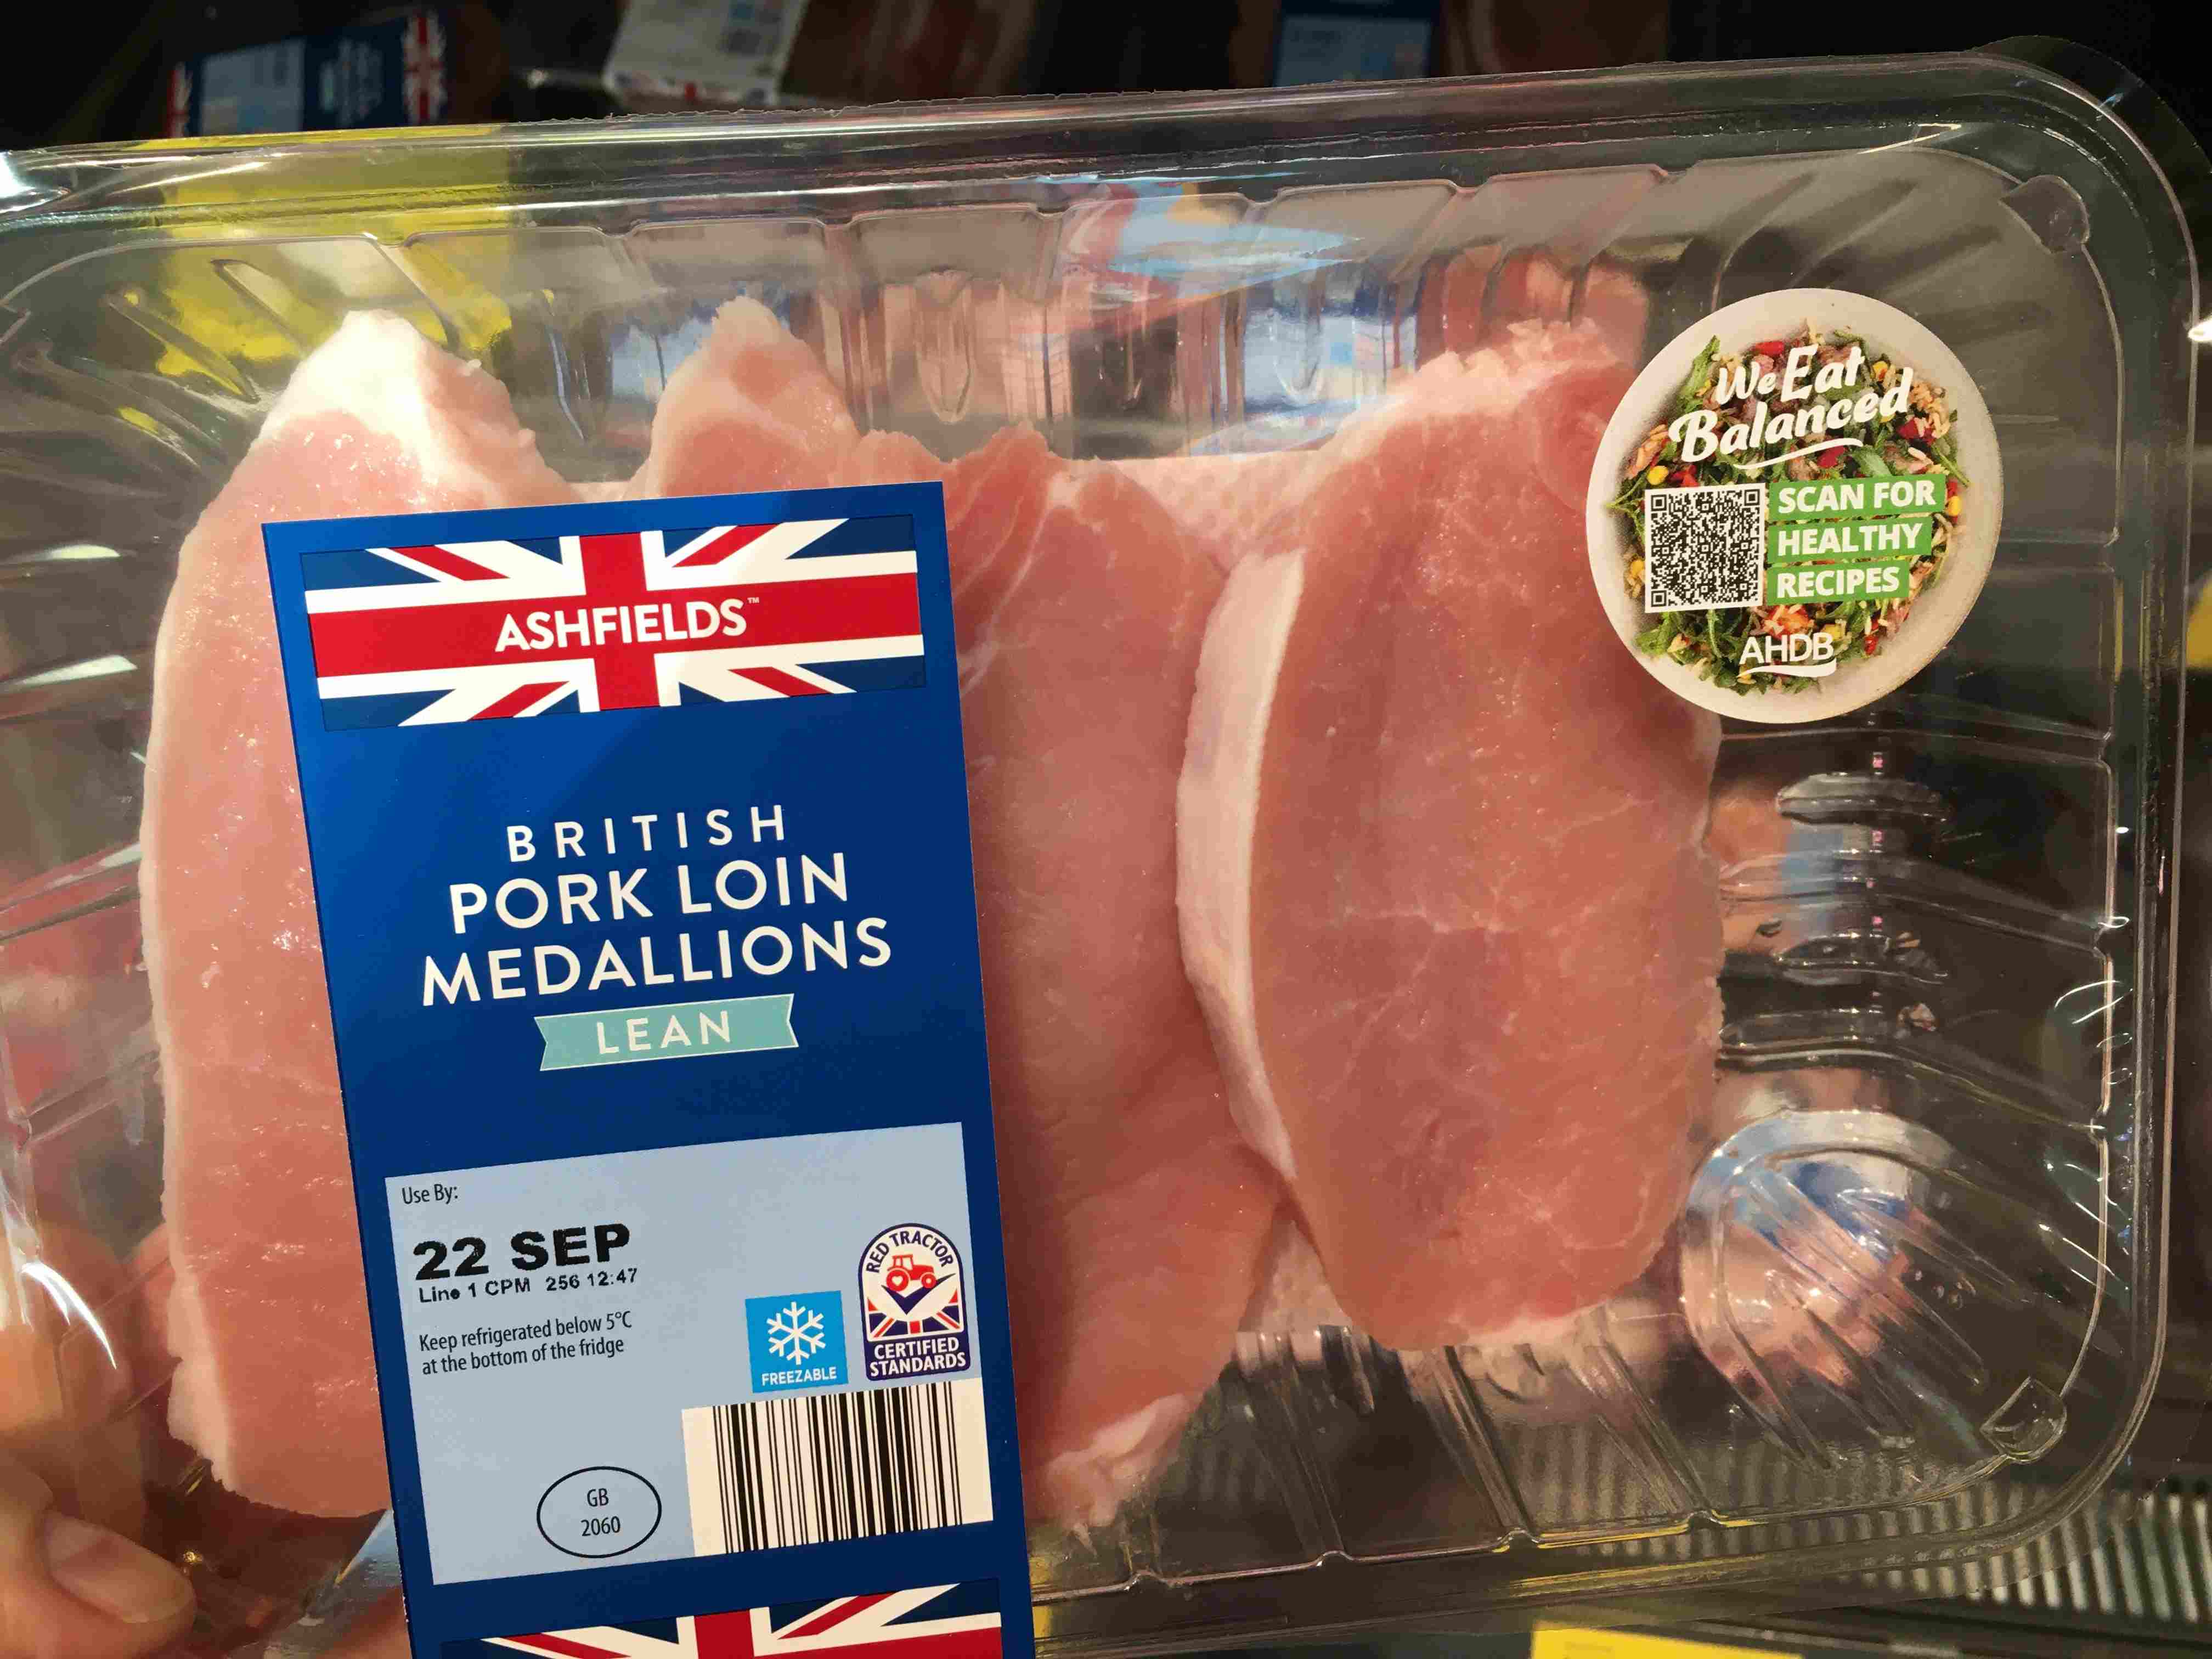 Pork medallion pack with We Eat Balanced sticker